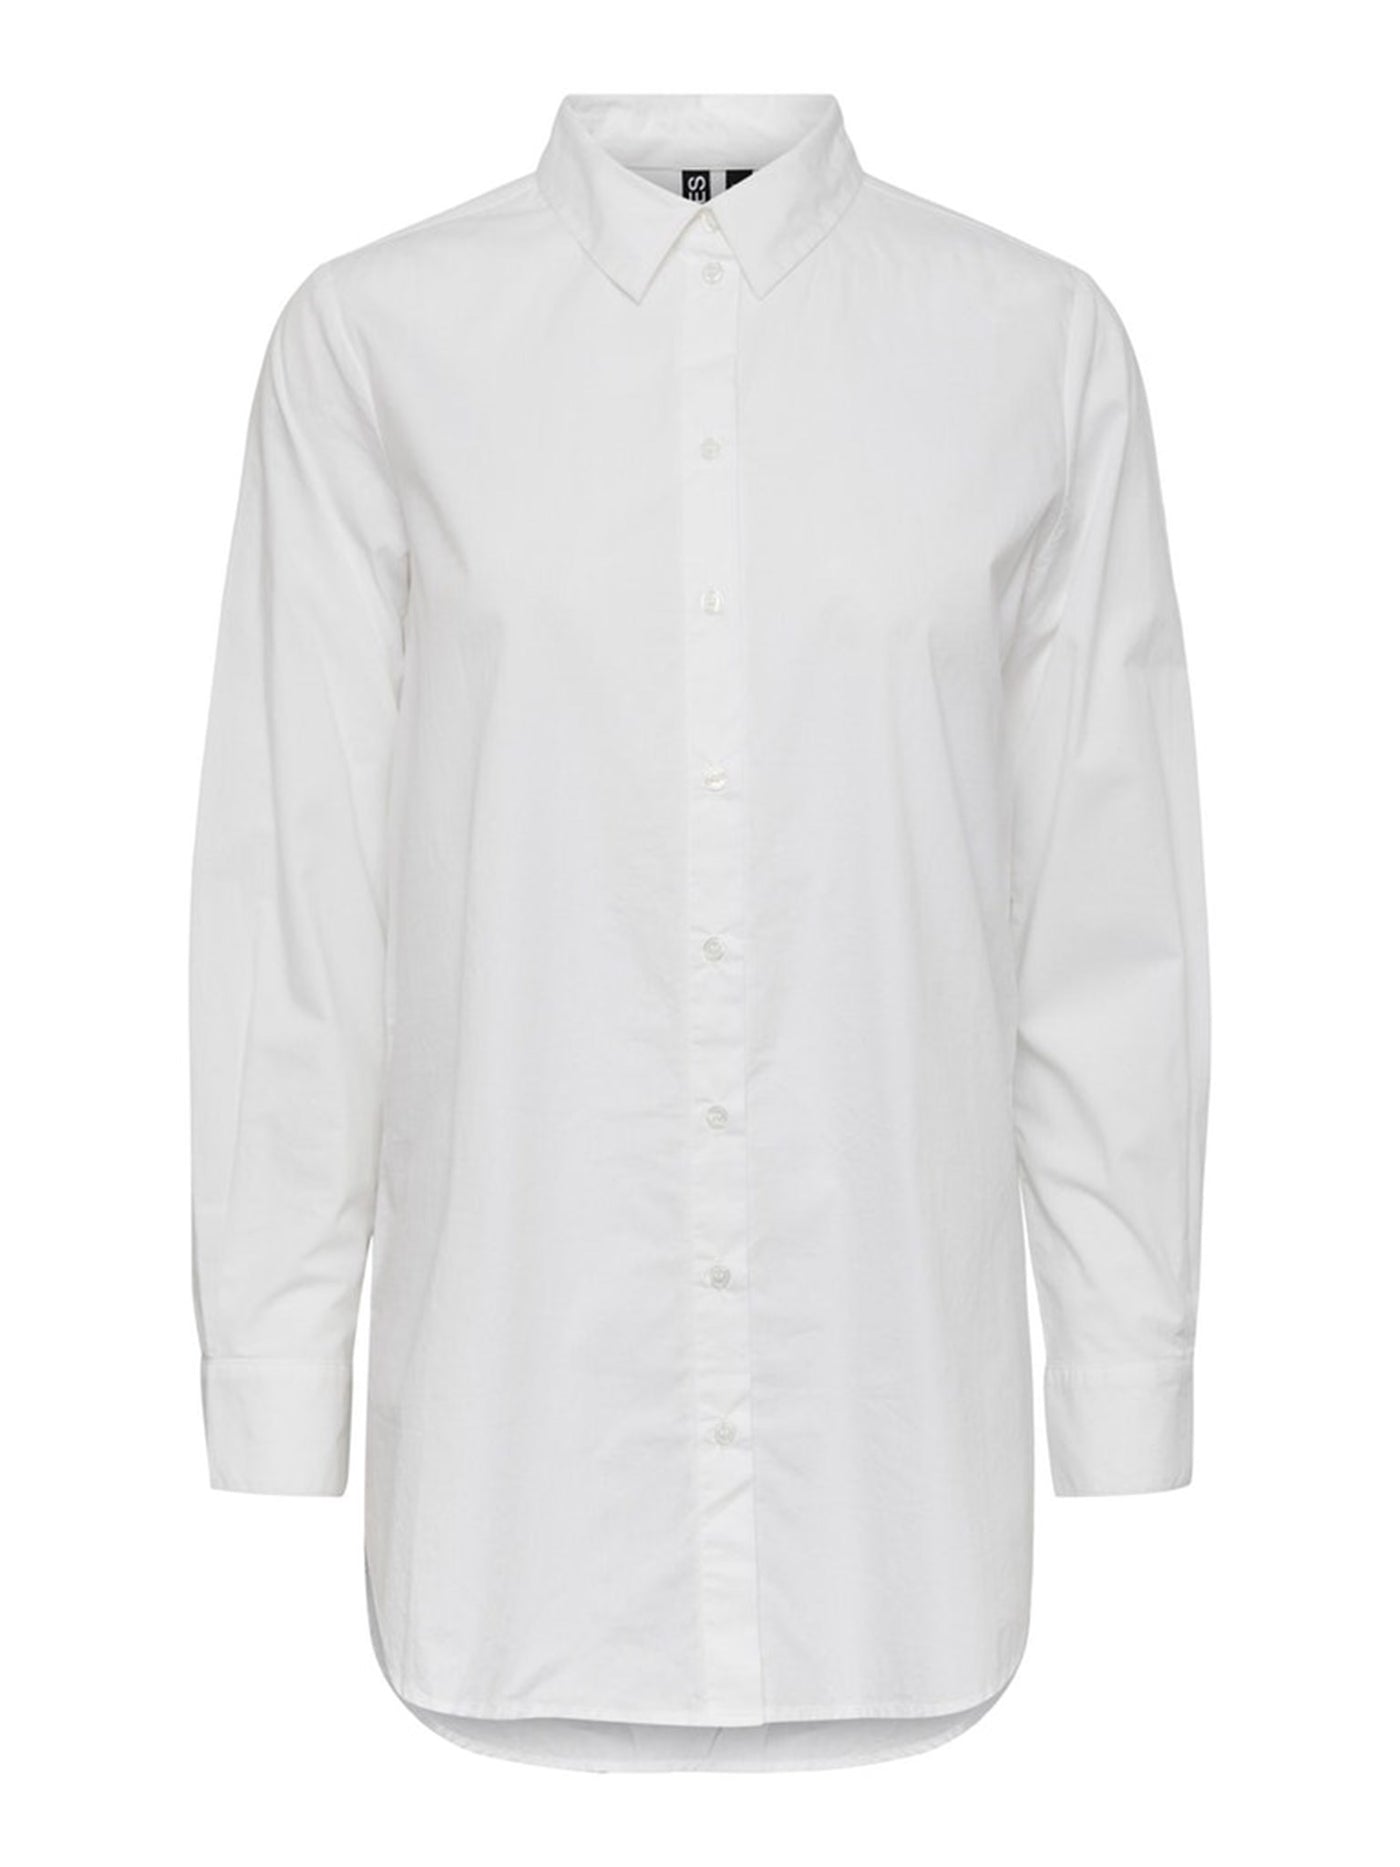 Jiva Long Sleeved Shirt - Cloud Dancer - PIECES - White 3